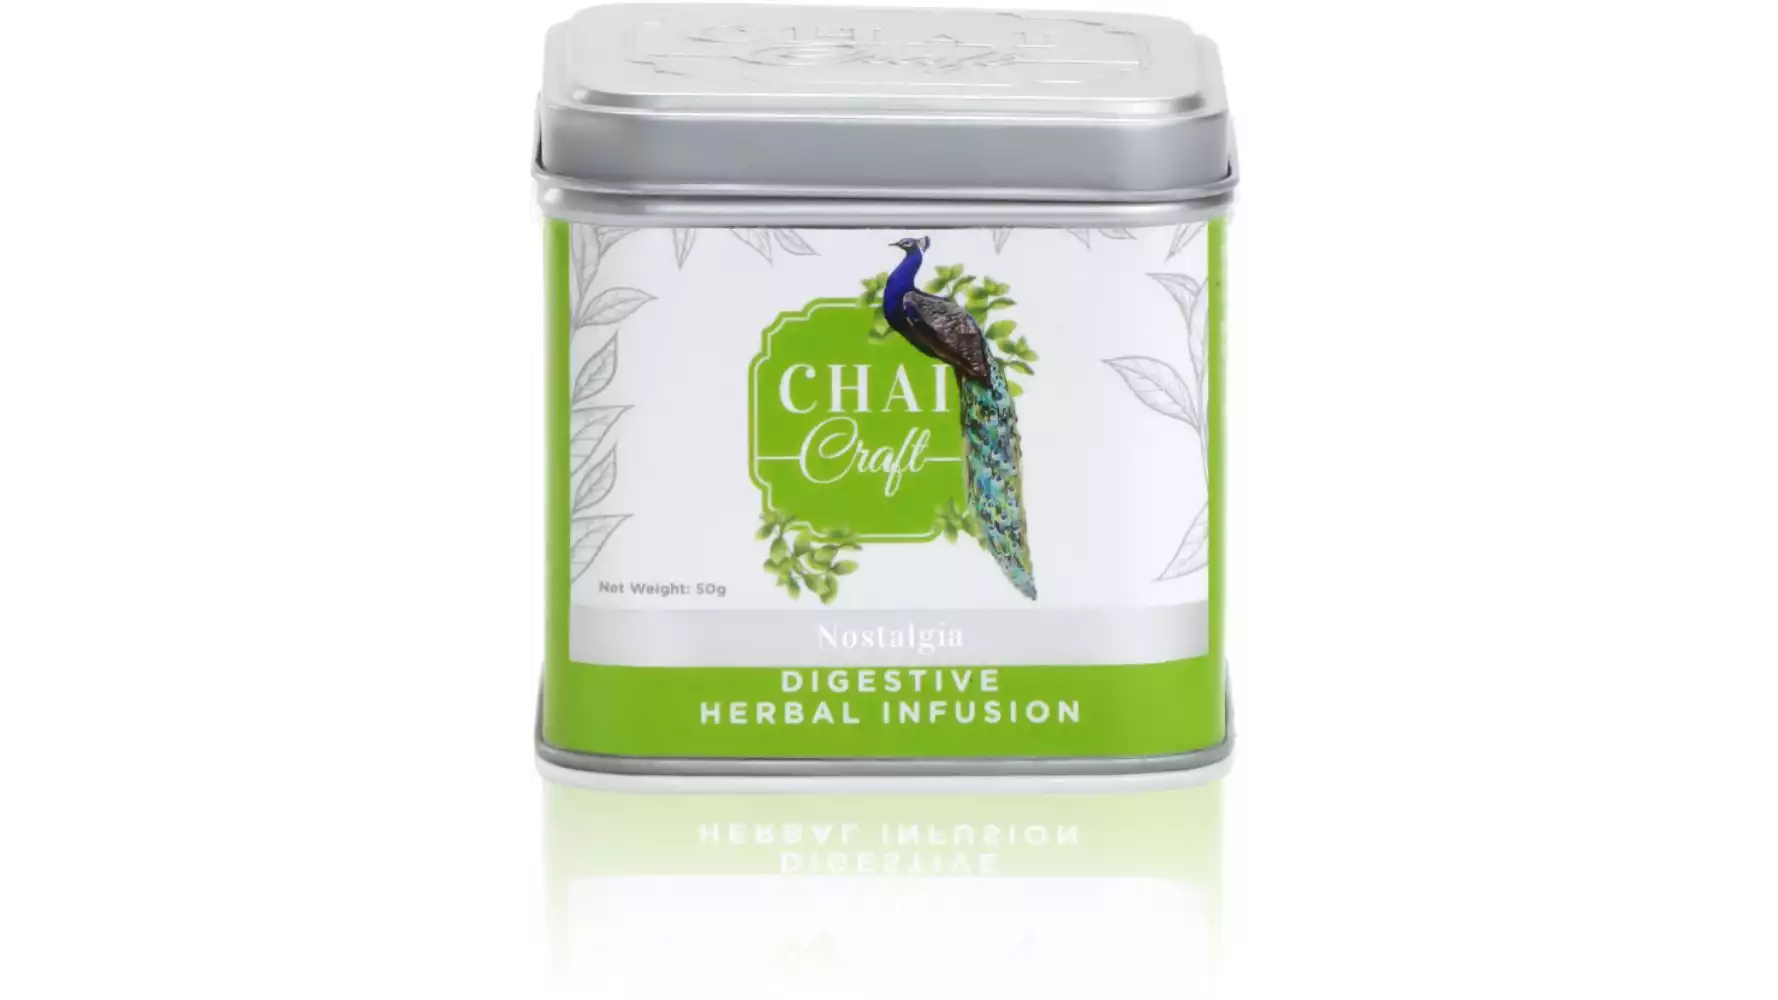 Chai Craft Digestive Herbal Infusion Tea (50g)